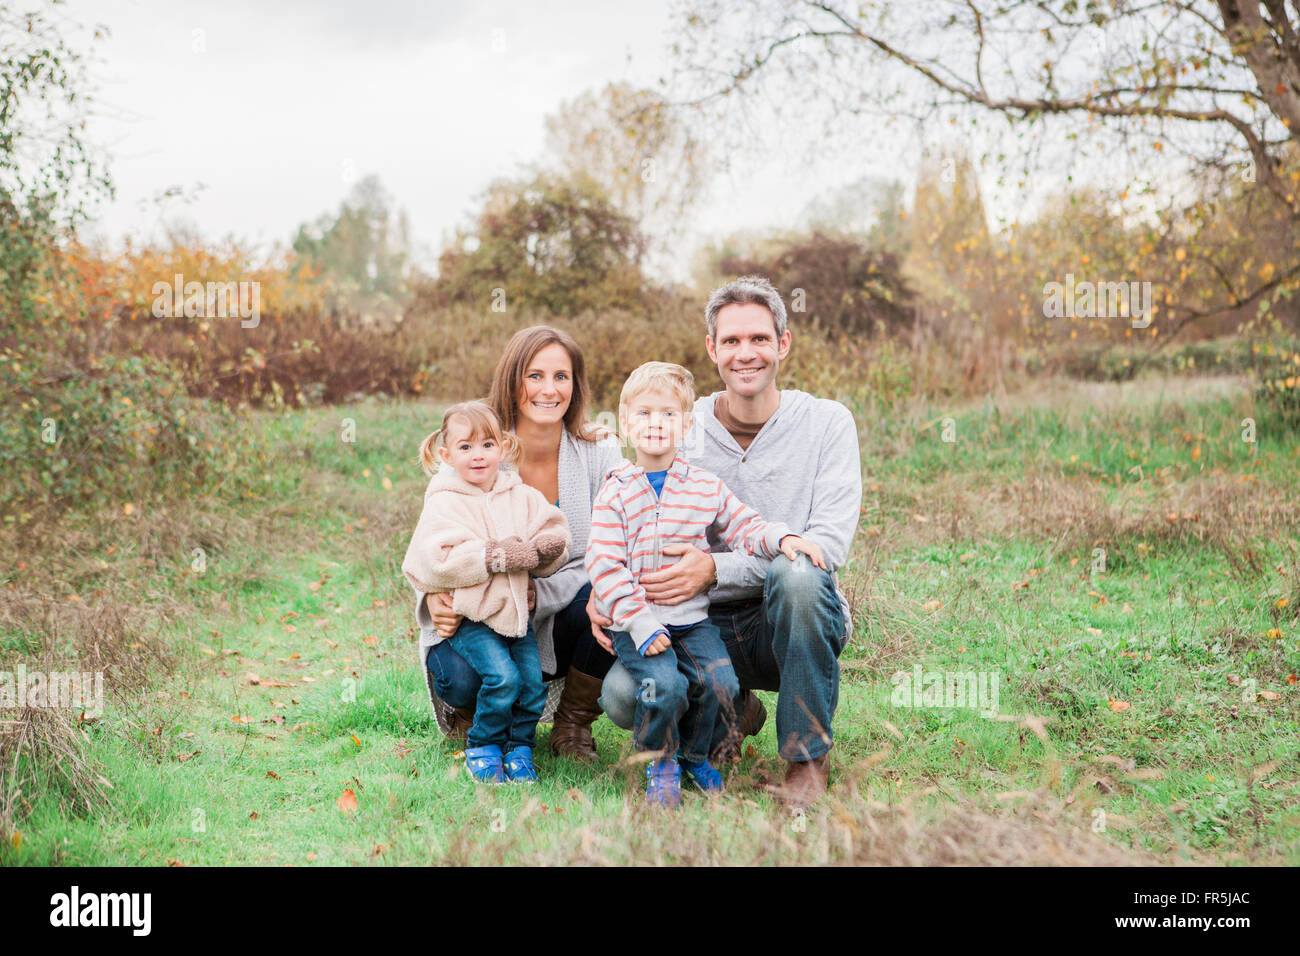 Portrait smiling family in rural park Stock Photo